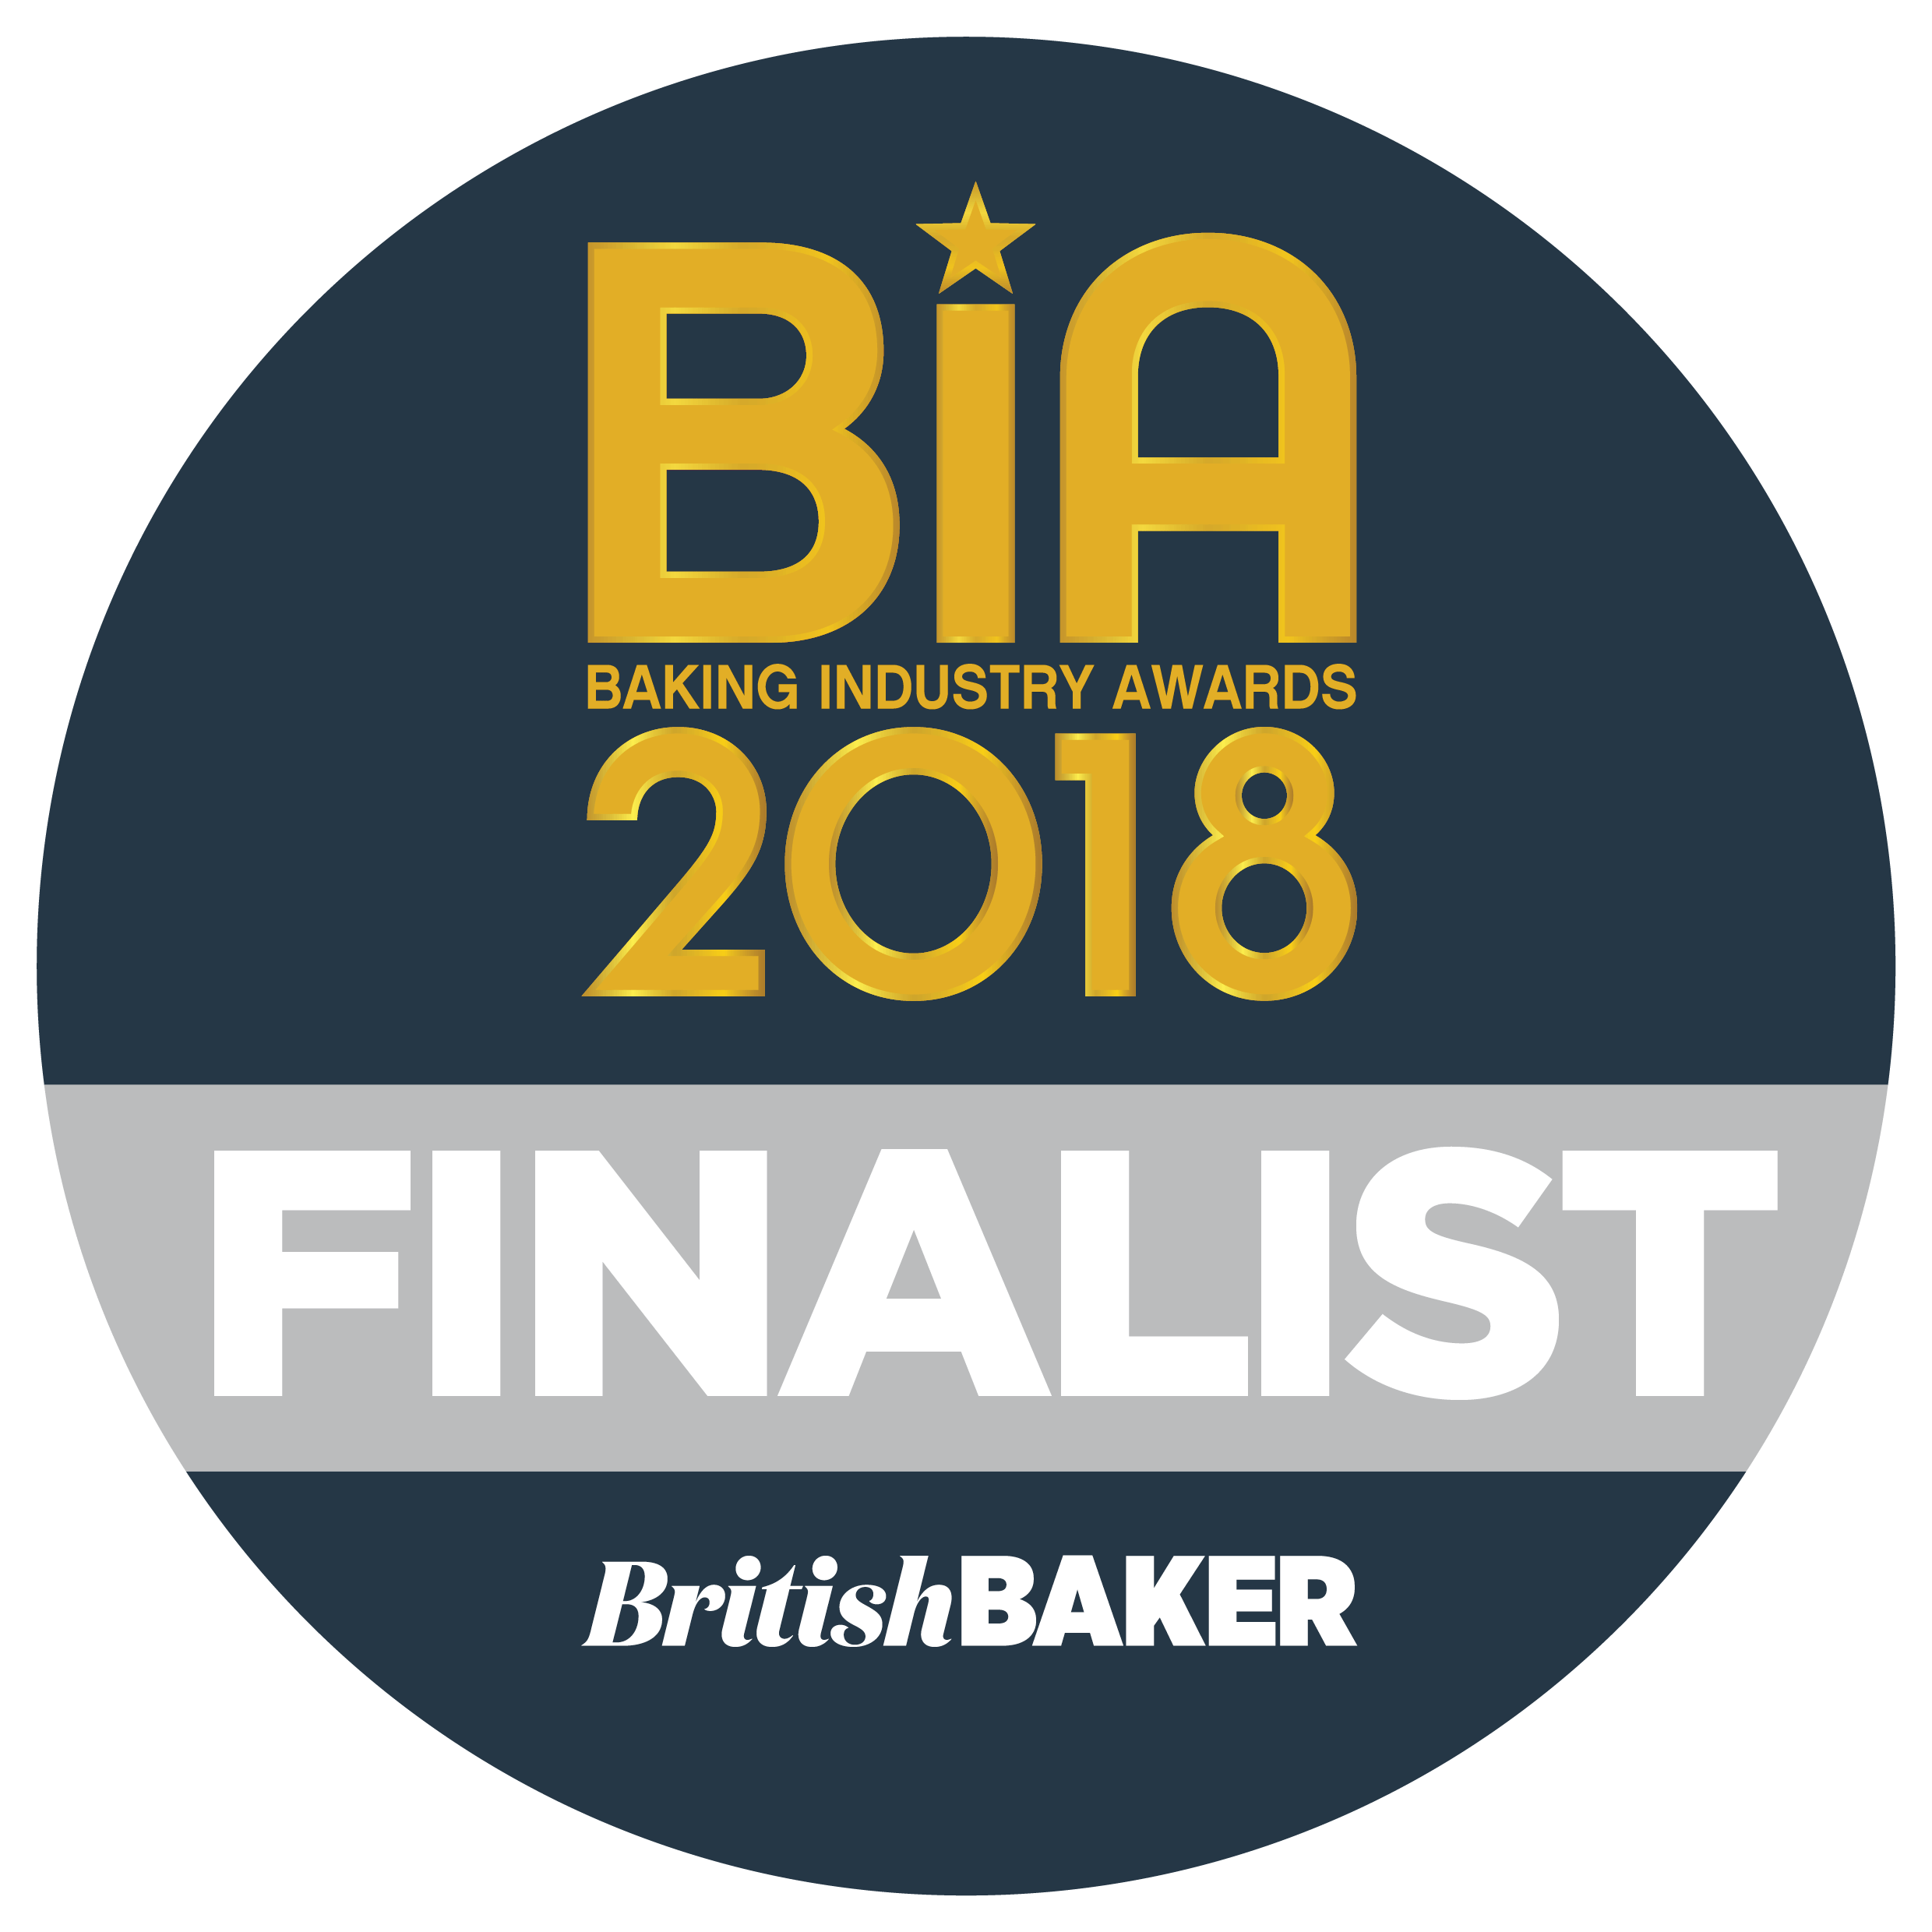 Bit.ly Logo - Baking Industry Awards Finalist Logos - The Baking Industry Awards